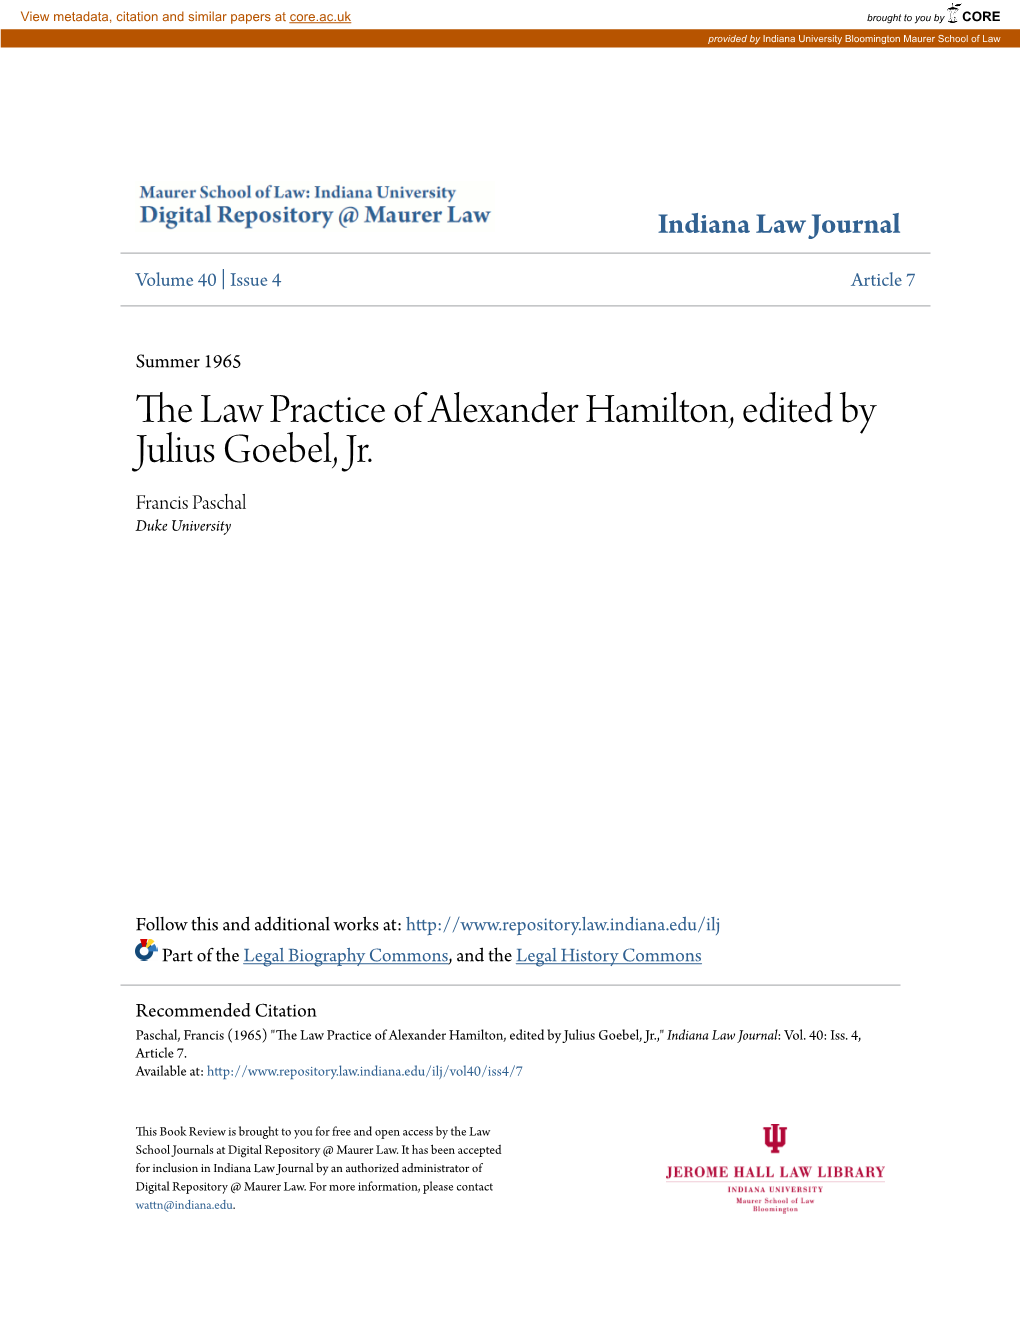 The Law Practice of Alexander Hamilton, Edited by Julius Goebel, Jr